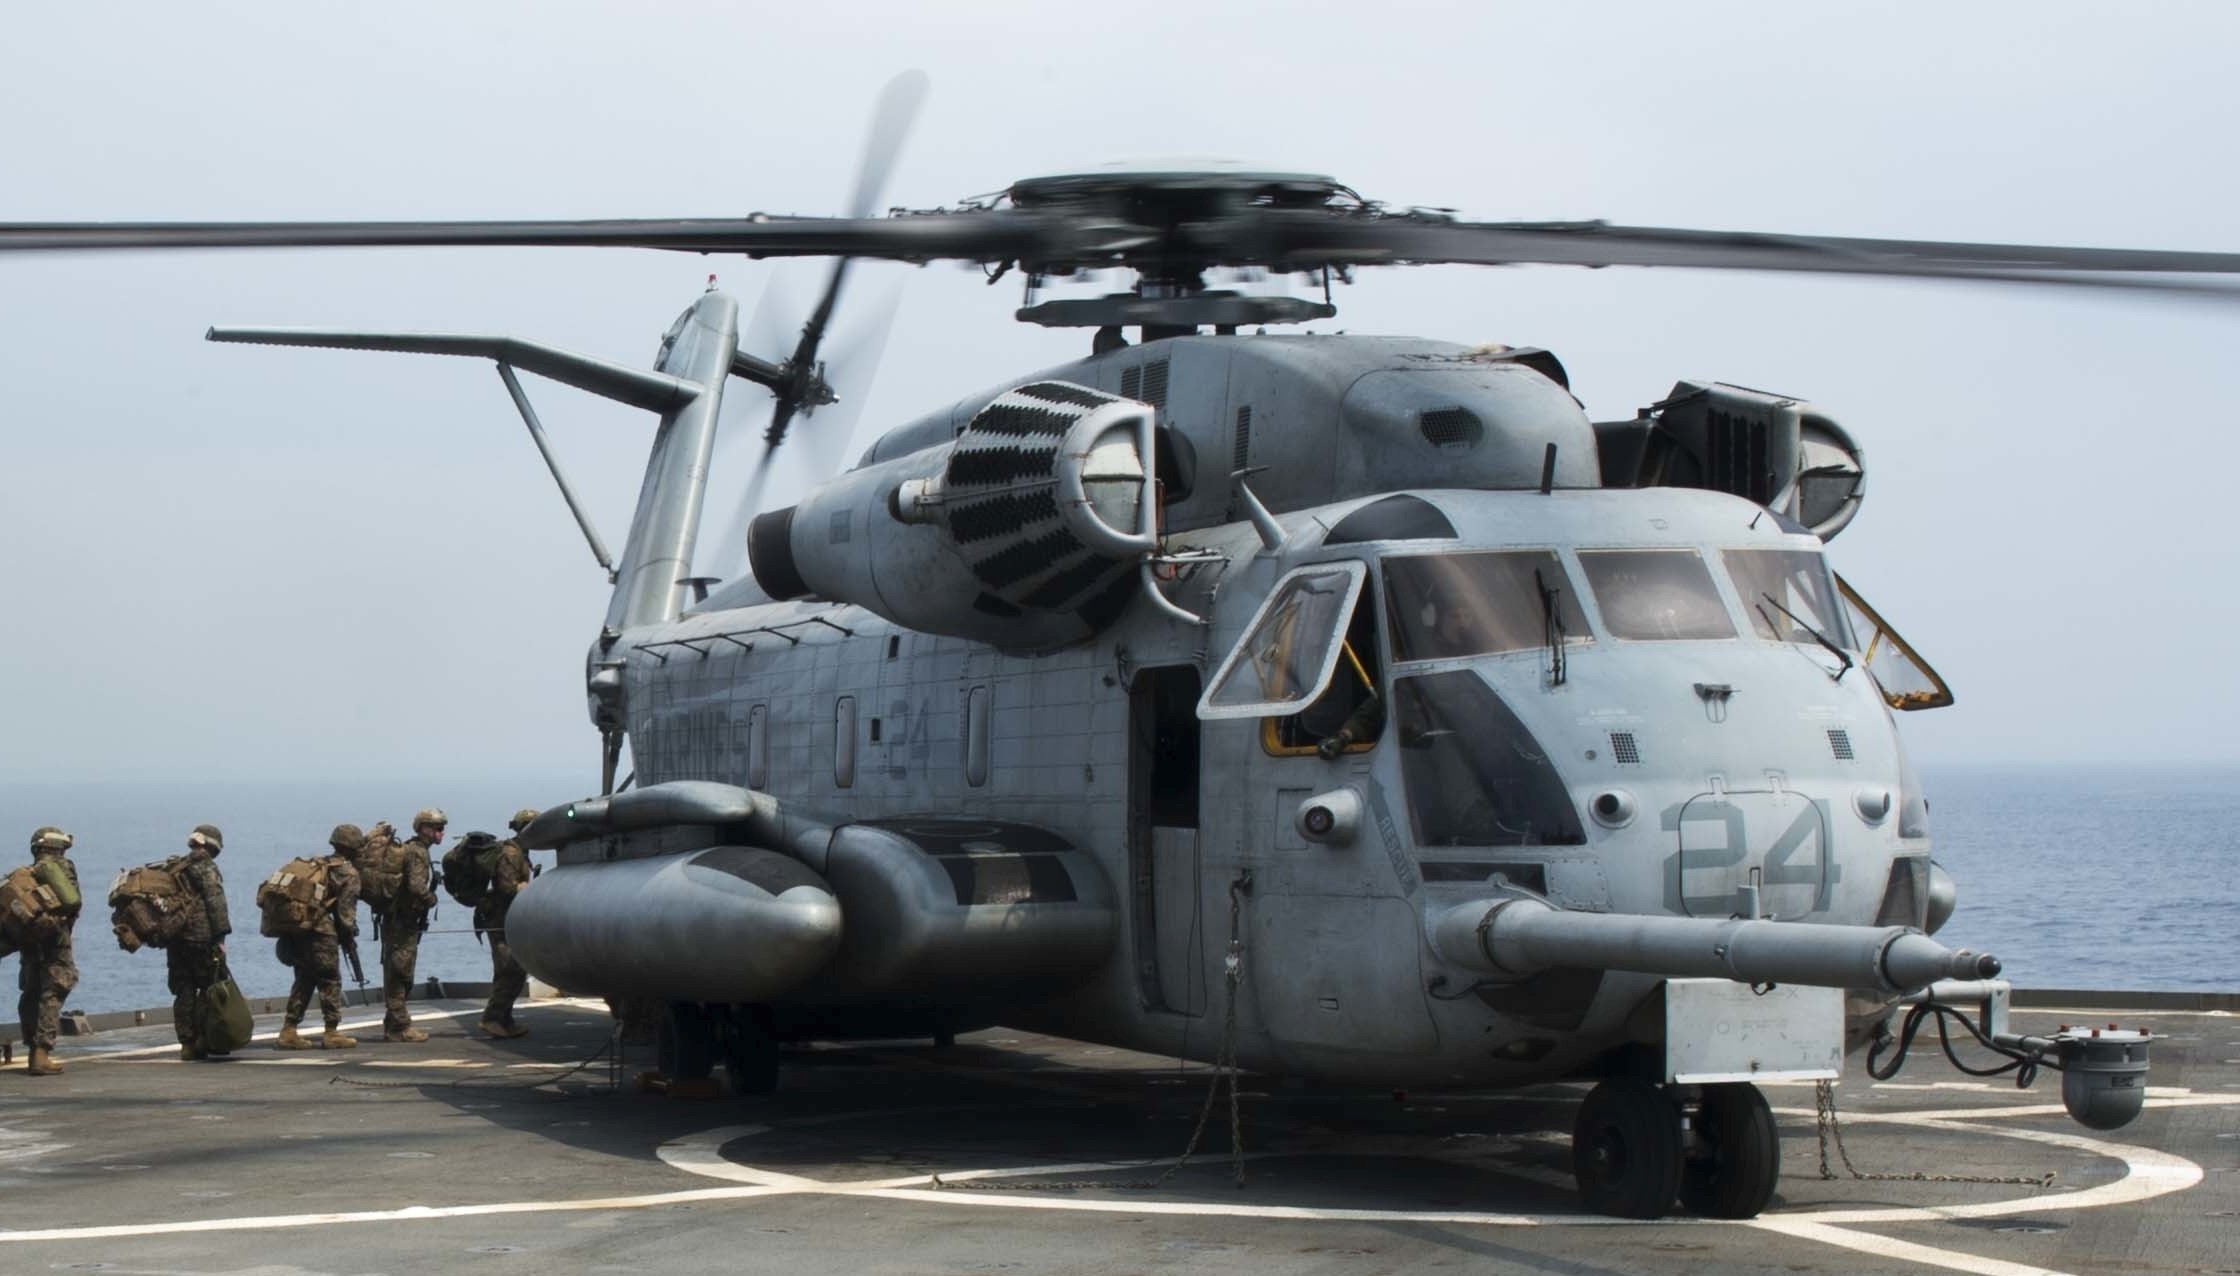 hmh-361 flying tigers marine heavy helicopter squadron usmc sikorsky ch-53e super stallion mcas miramar california 90x